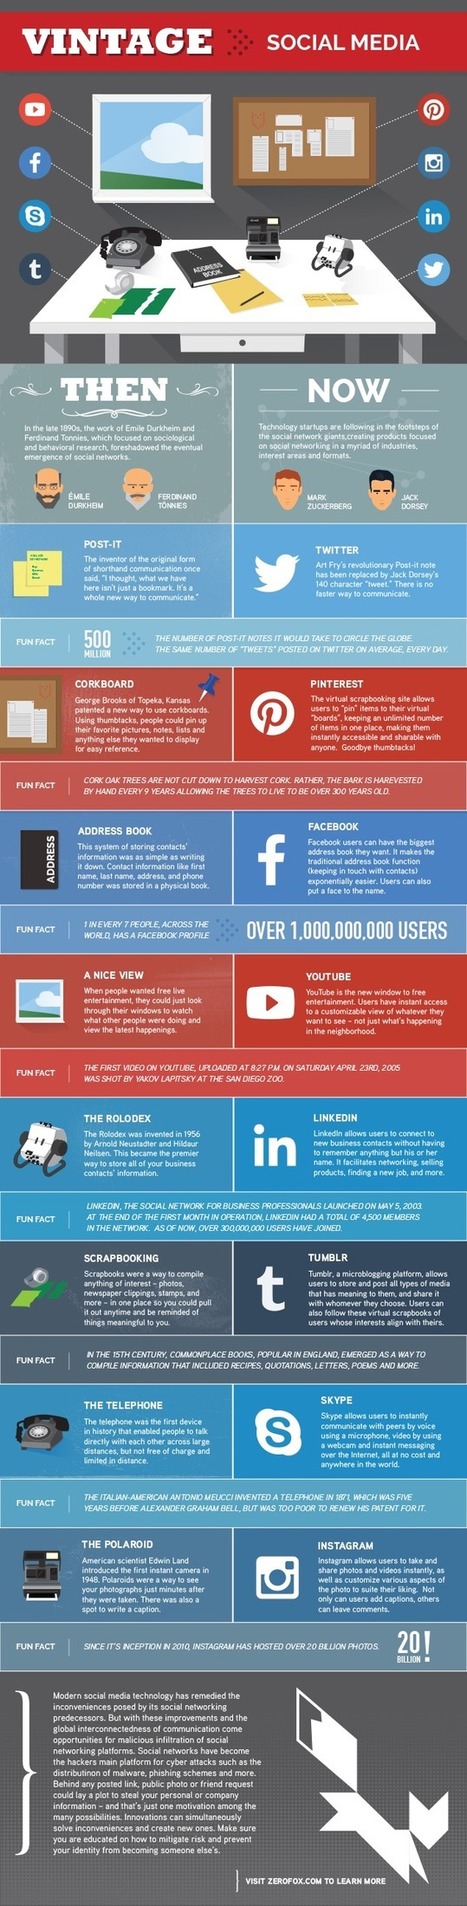 Redes Sociales Vintage #infografia #infographic #socialmedia | E-Learning-Inclusivo (Mashup) | Scoop.it